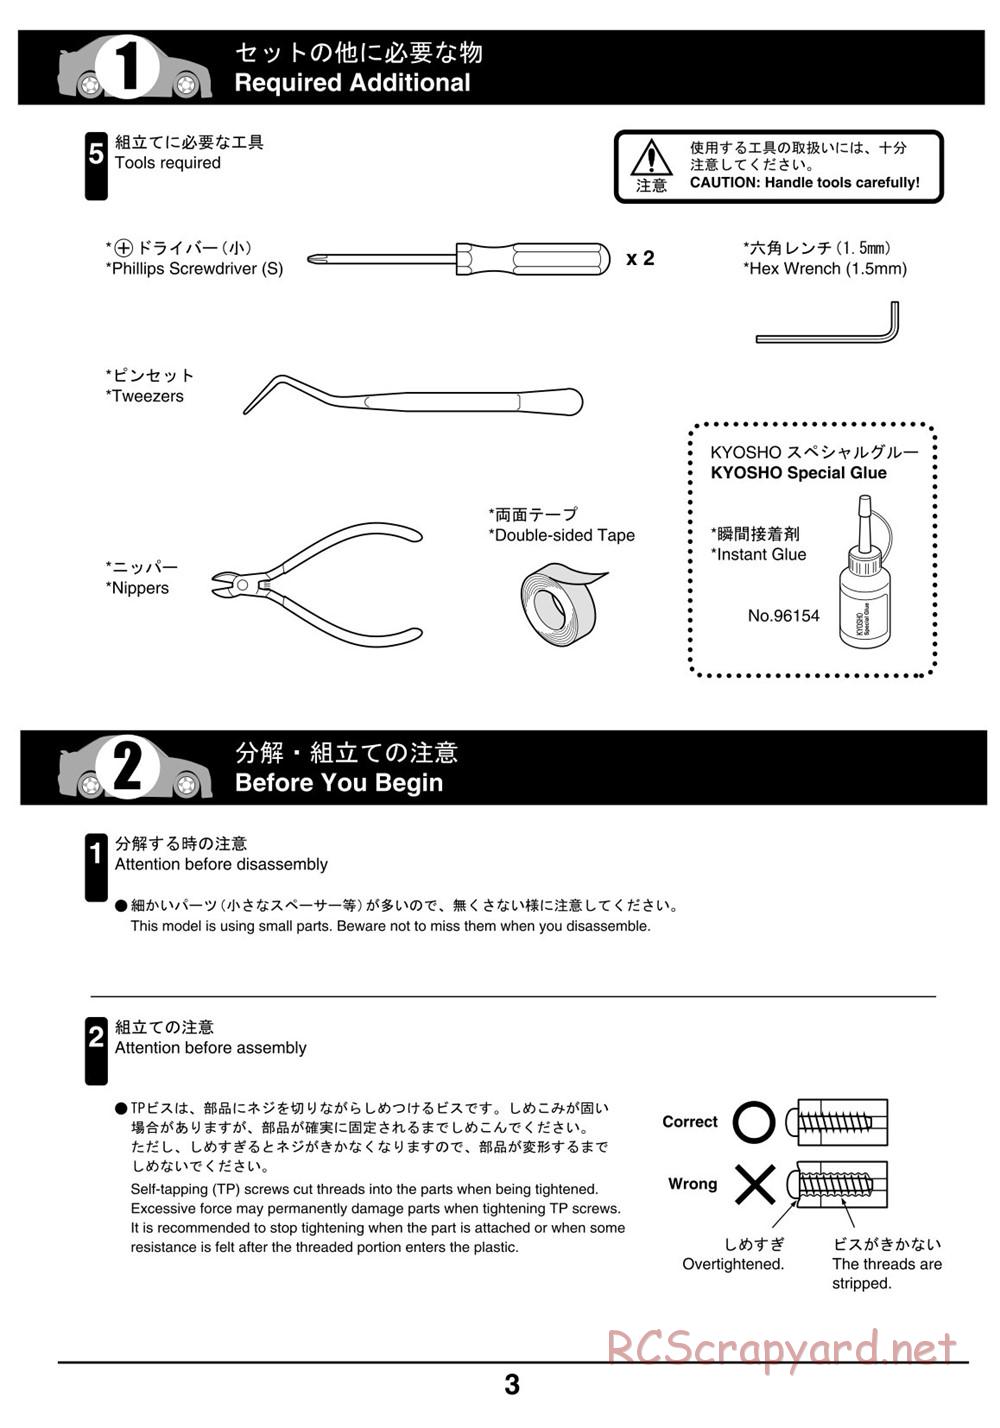 Kyosho - NRX-18 - Manual - Page 3